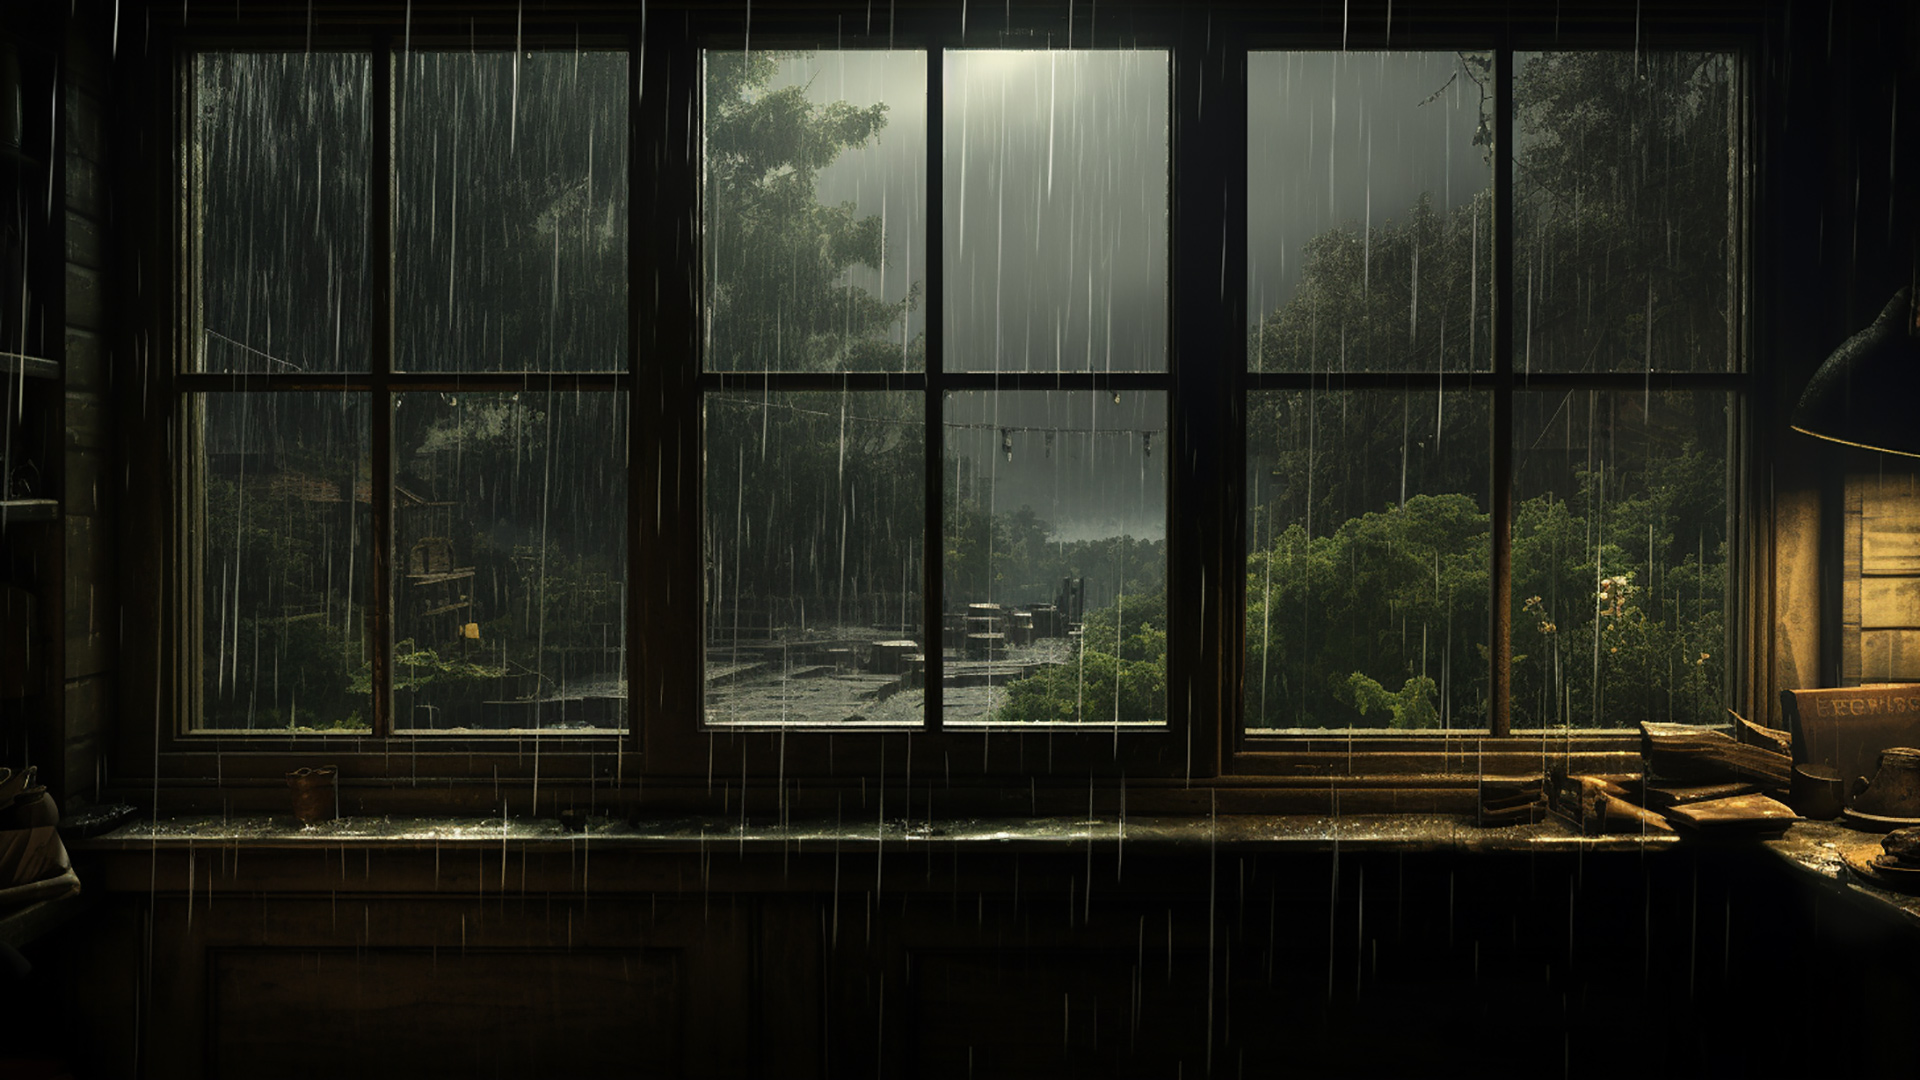 Digital Tranquility in HD Rainy Window View Wallpaper